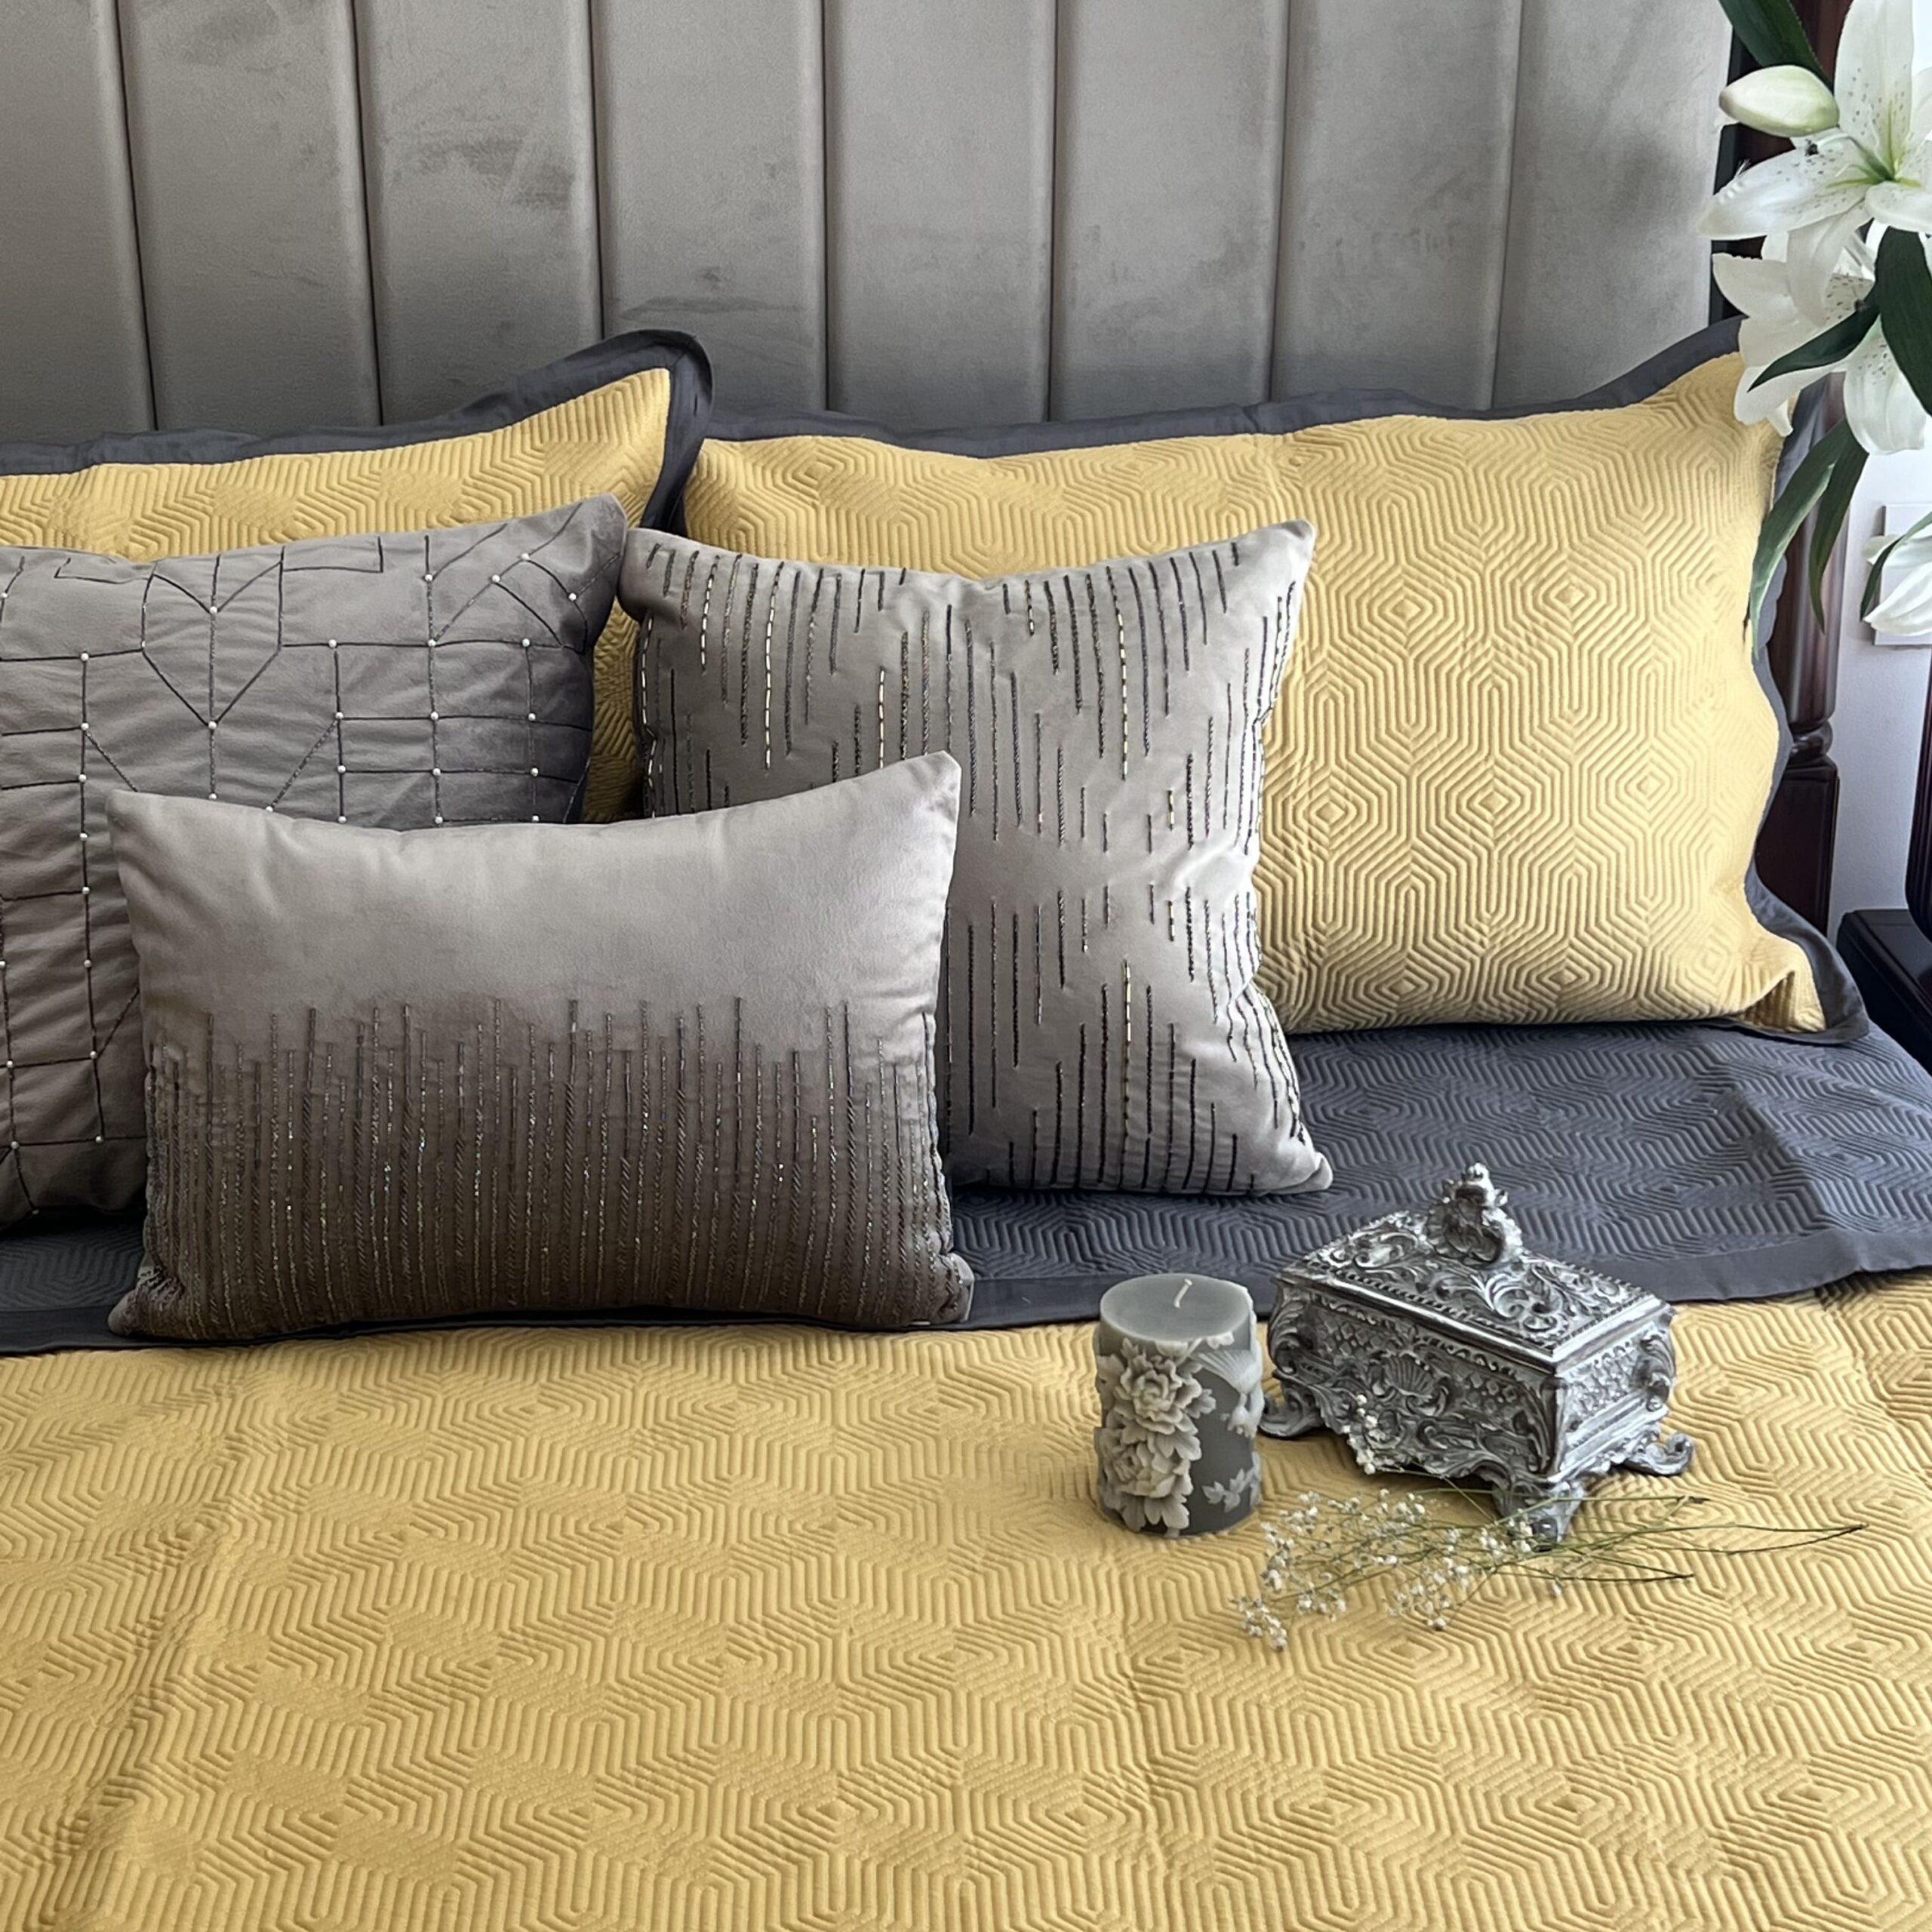 Buttercup Yellow and Dark Grey Diaco Cotton Reversible Bedspread